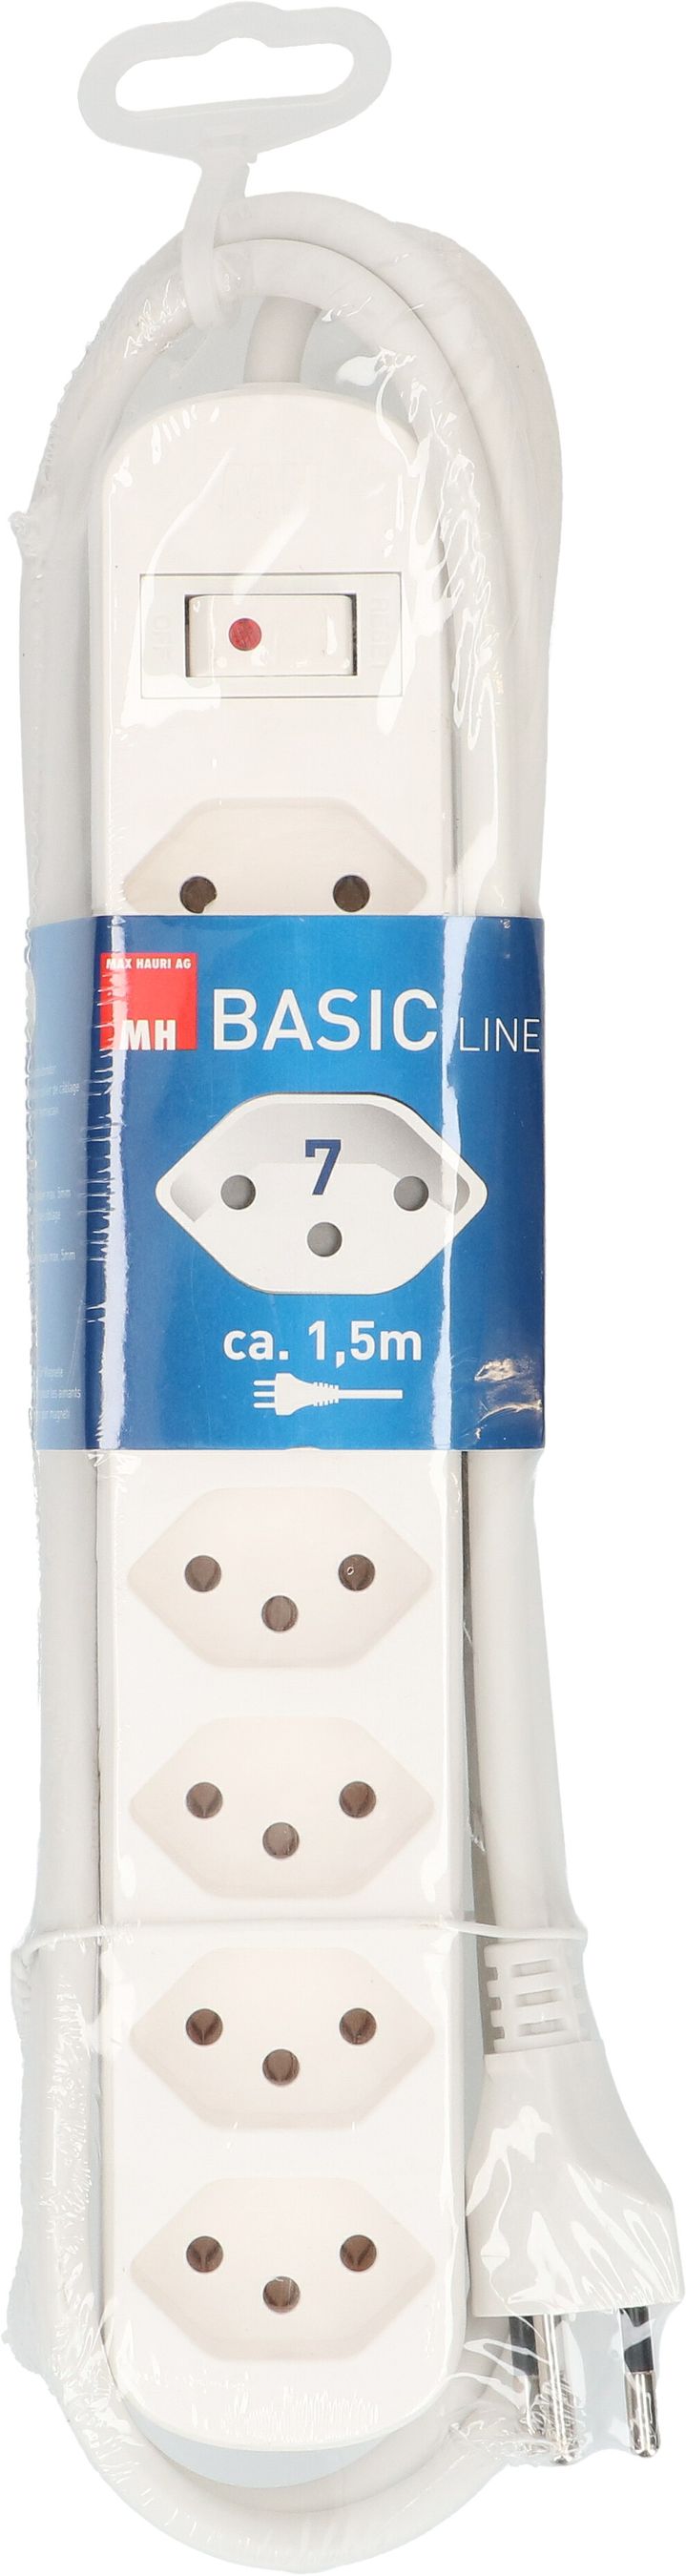 multipresa Basic Line 7x tipo 13 bianco interruttore 1.5m